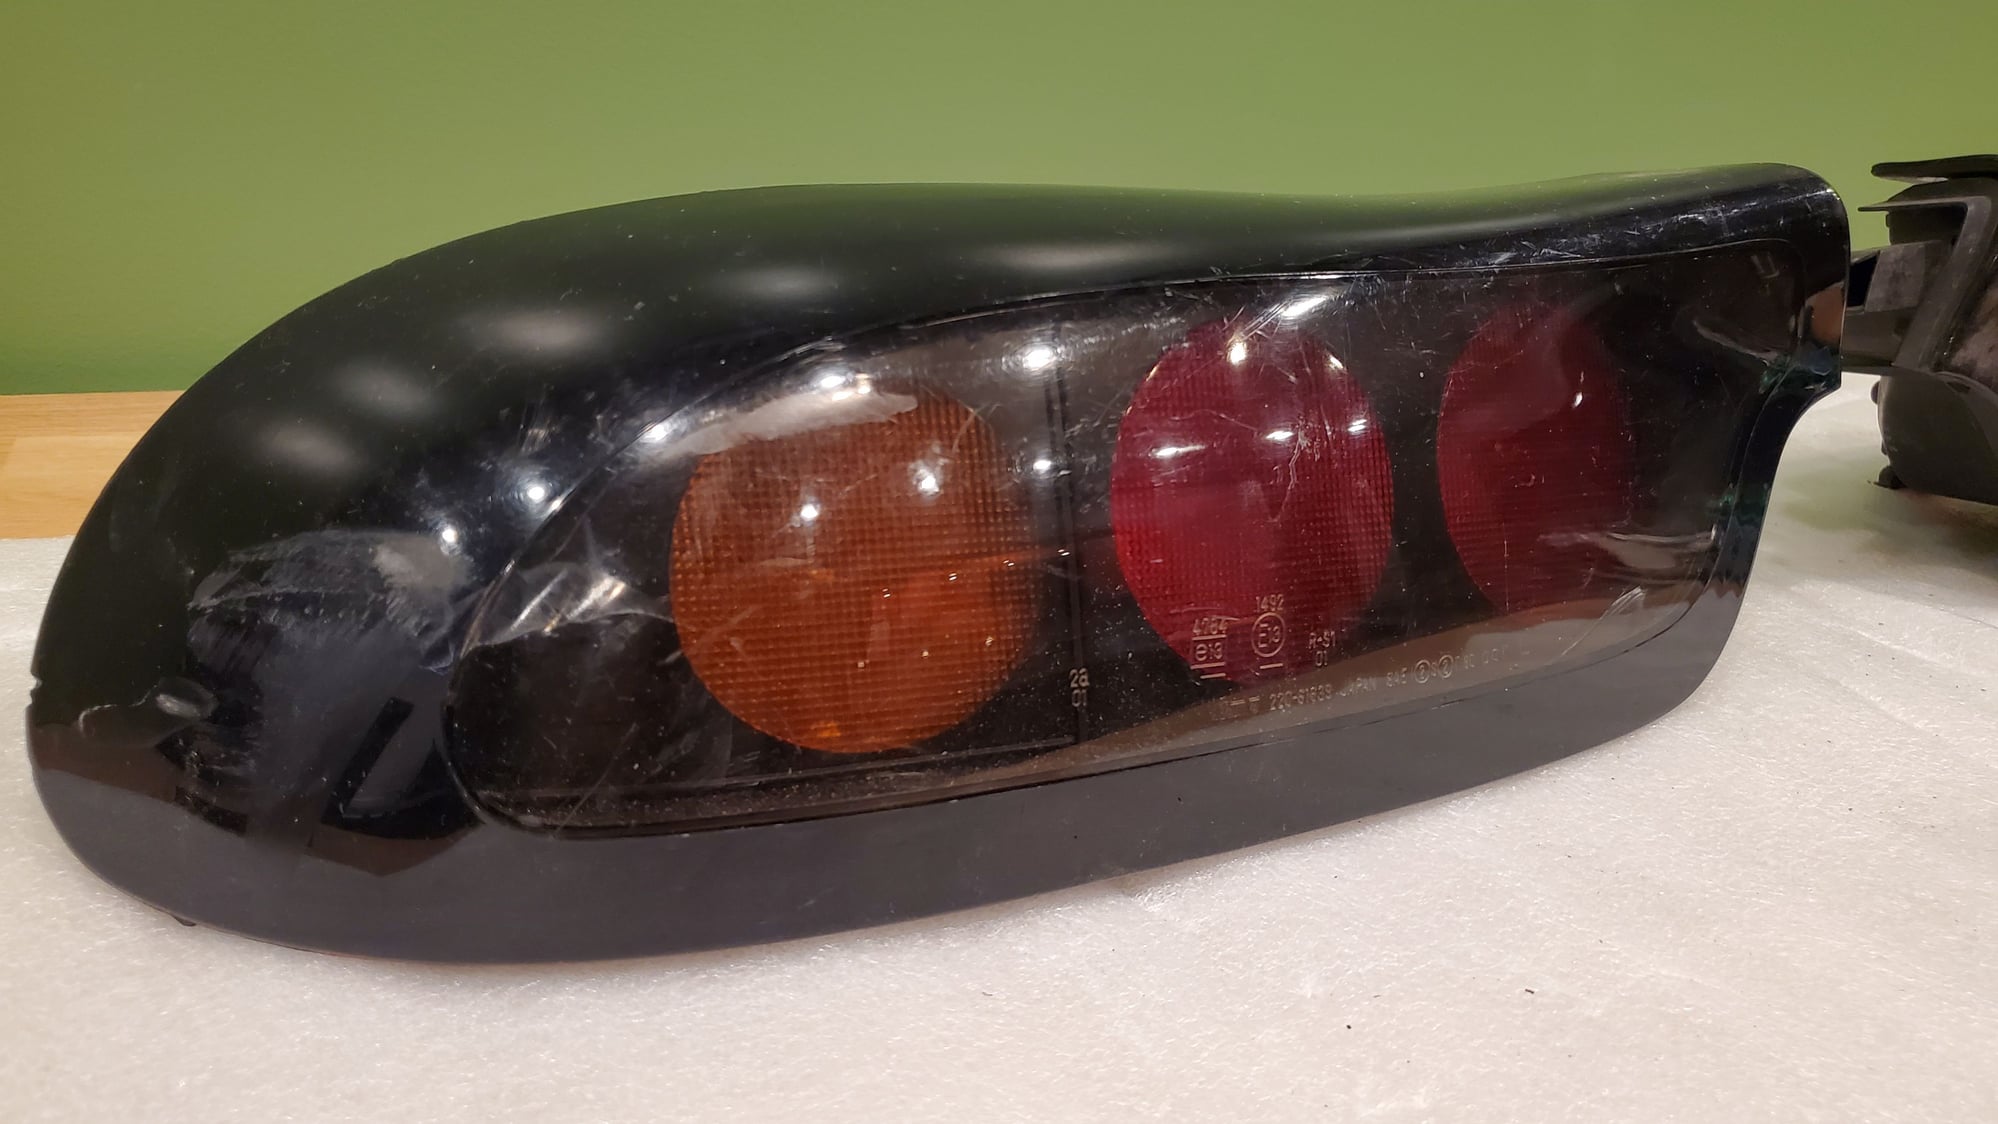 Lights - 99 spec tail lights - Used - 1992 to 2002 Mazda RX-7 - Acworth, GA 30102, United States